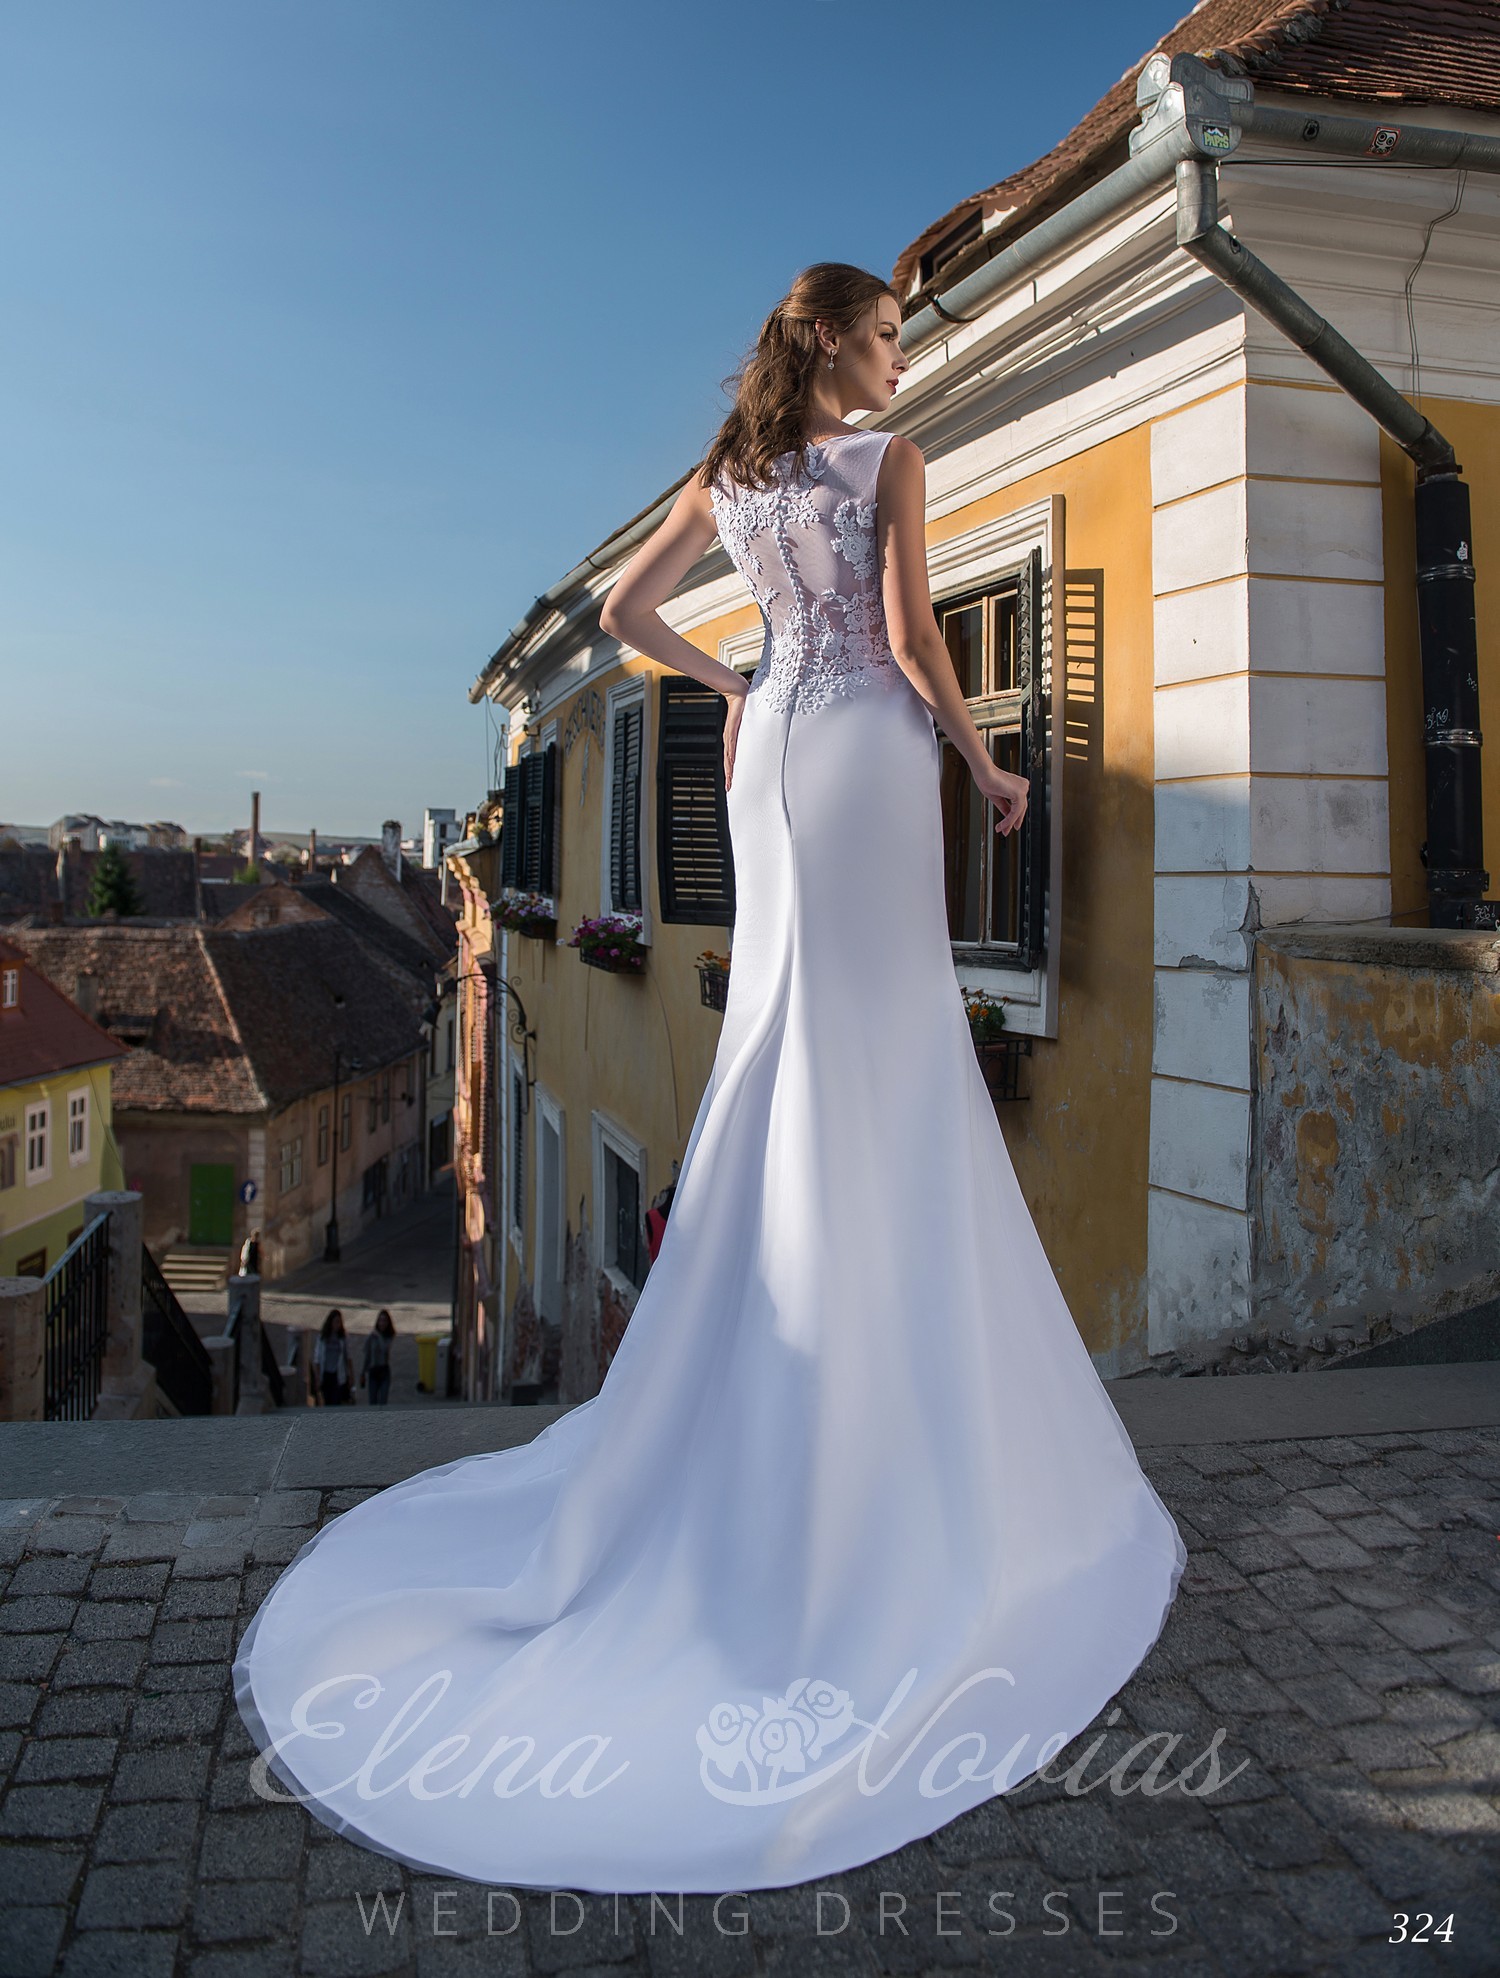 Light wedding dress with train wholesale from Elena Novias